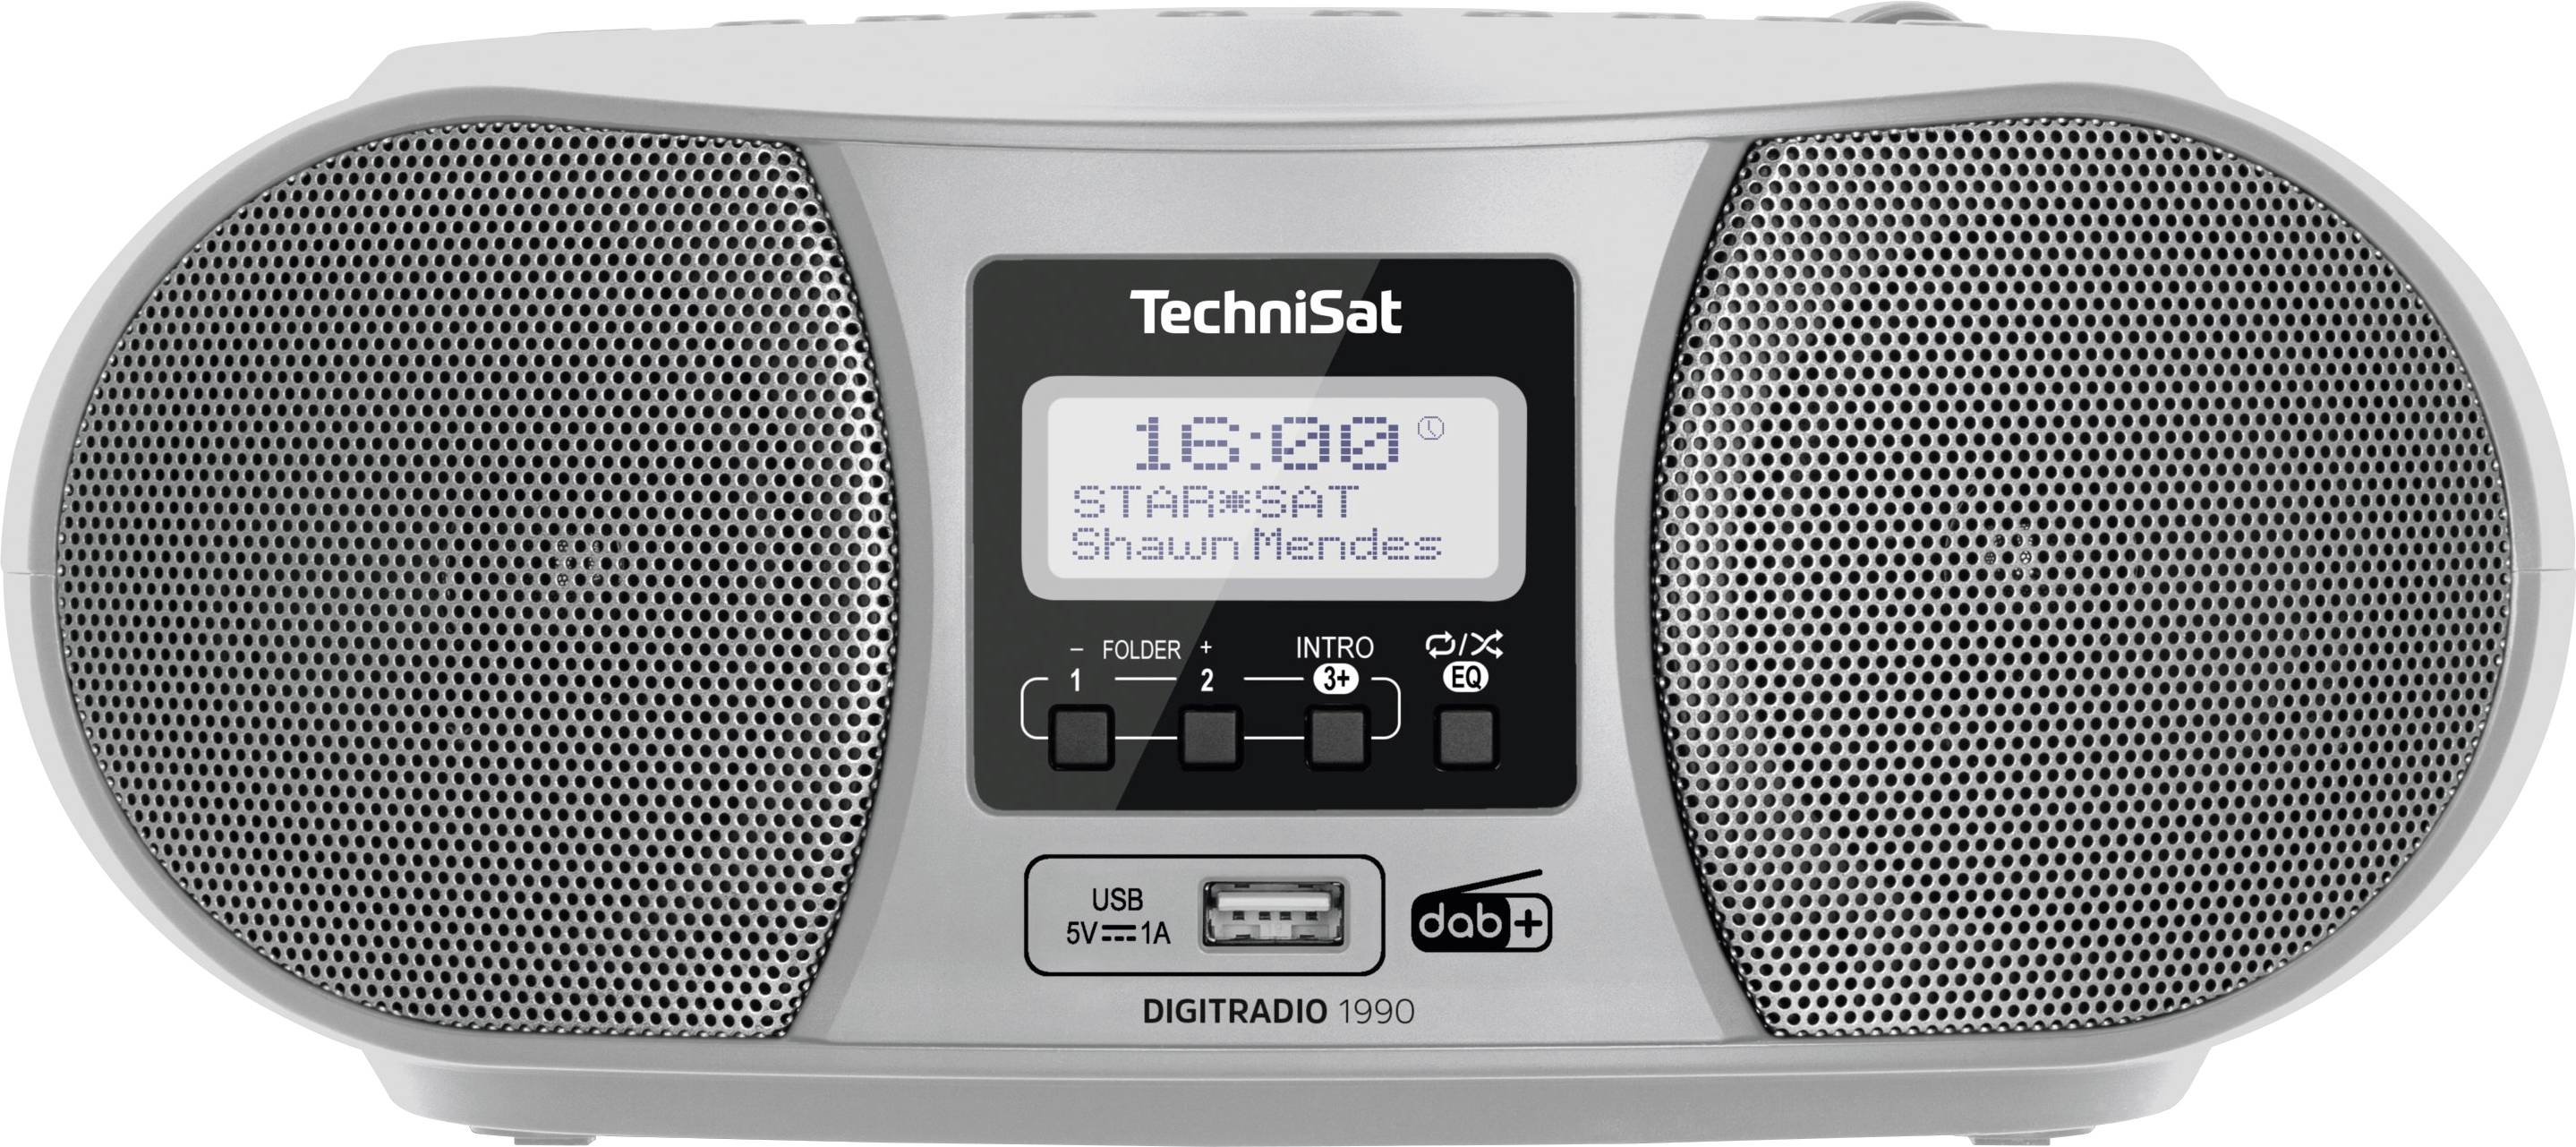 TechniSat DIGITRADIO 1990 CD-Radio DAB+, UKW AUX, Bluetooth®, CD, USB  Akku-Ladefunktion, Weckfunktion Silber kaufen